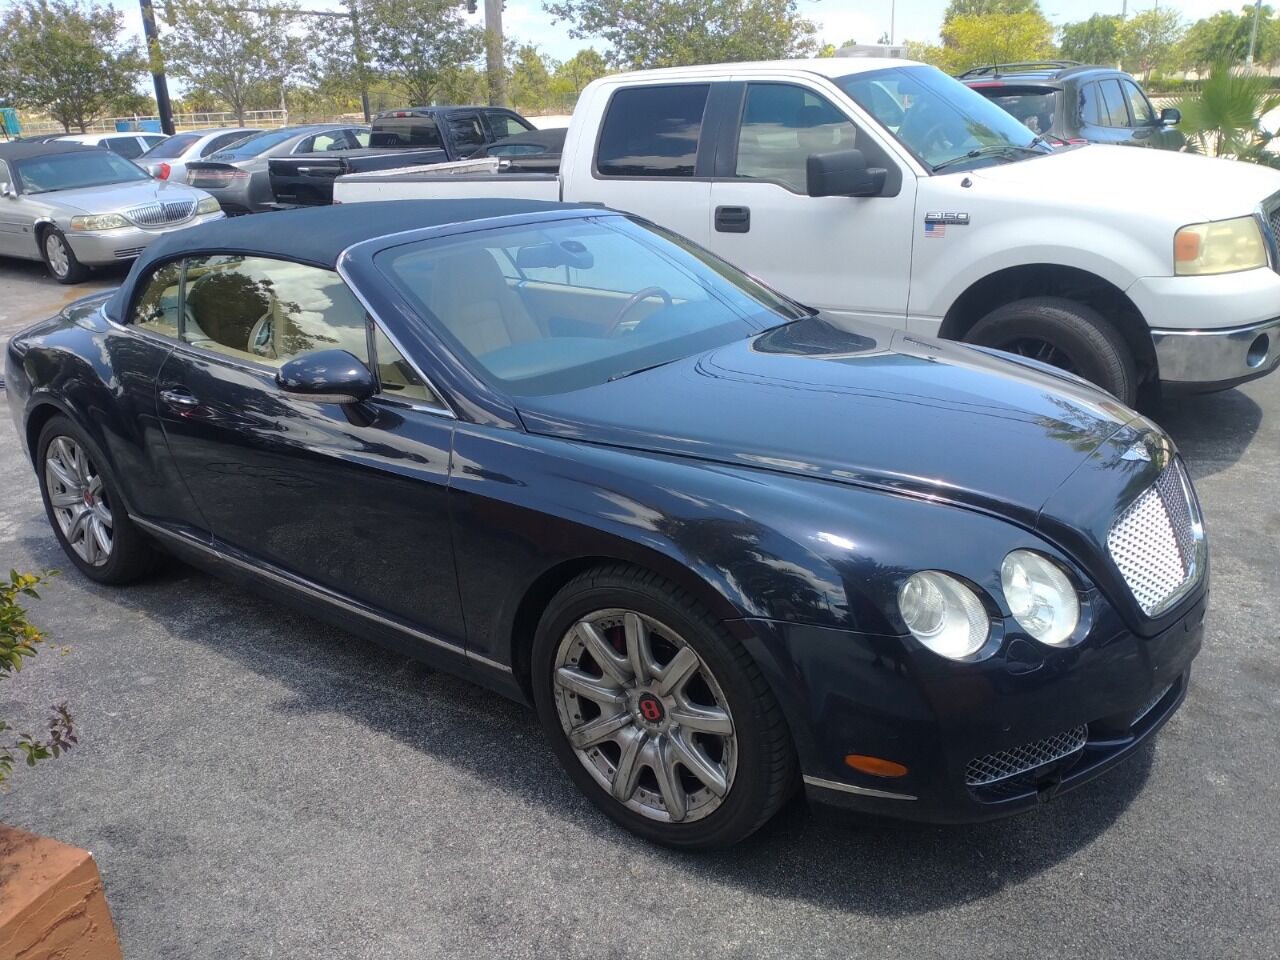 2008 Bentley Continental Convertible - $37,950